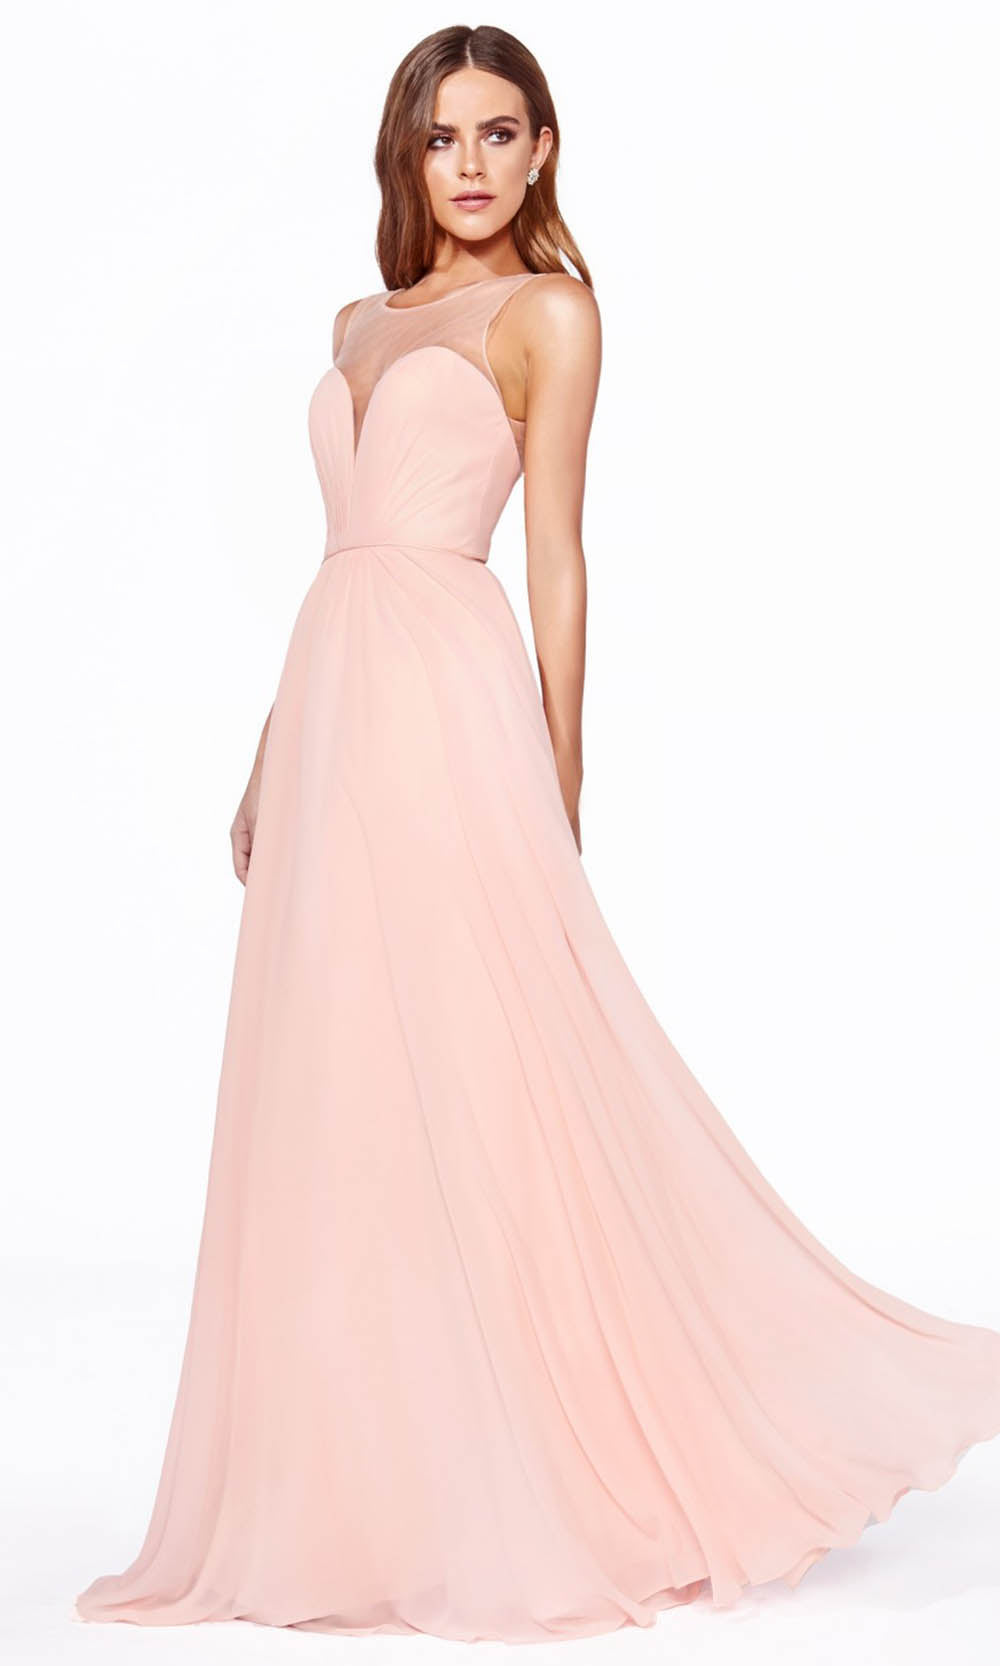 Cinderella Divine - CJ251 Illusion Neck Chiffon A-Line Gown In Pink